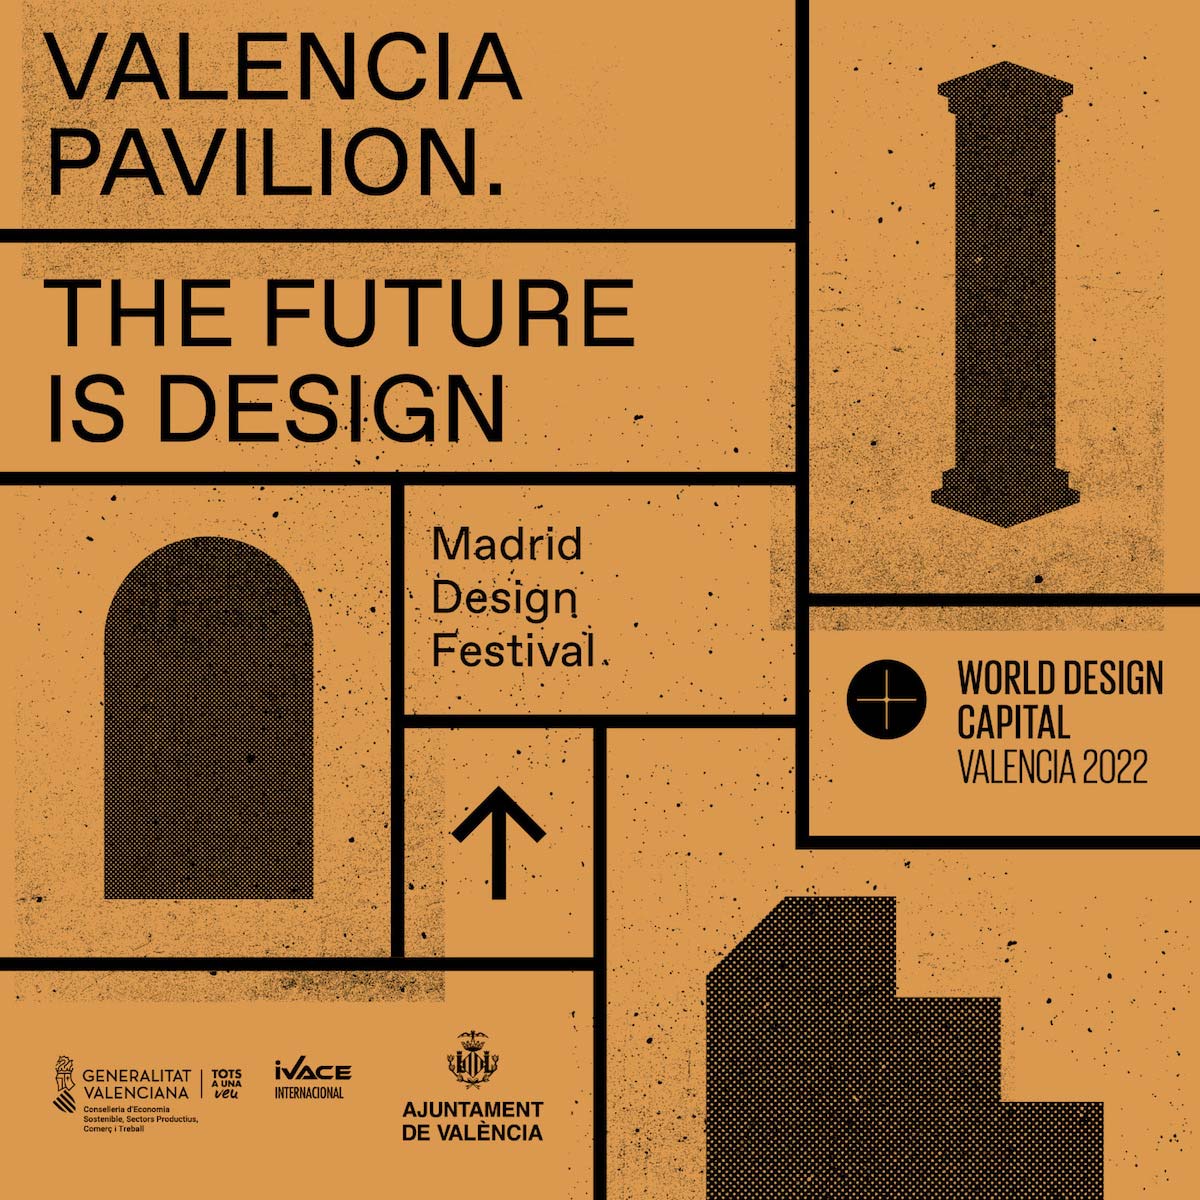 The future is design, Valencia Pavilion